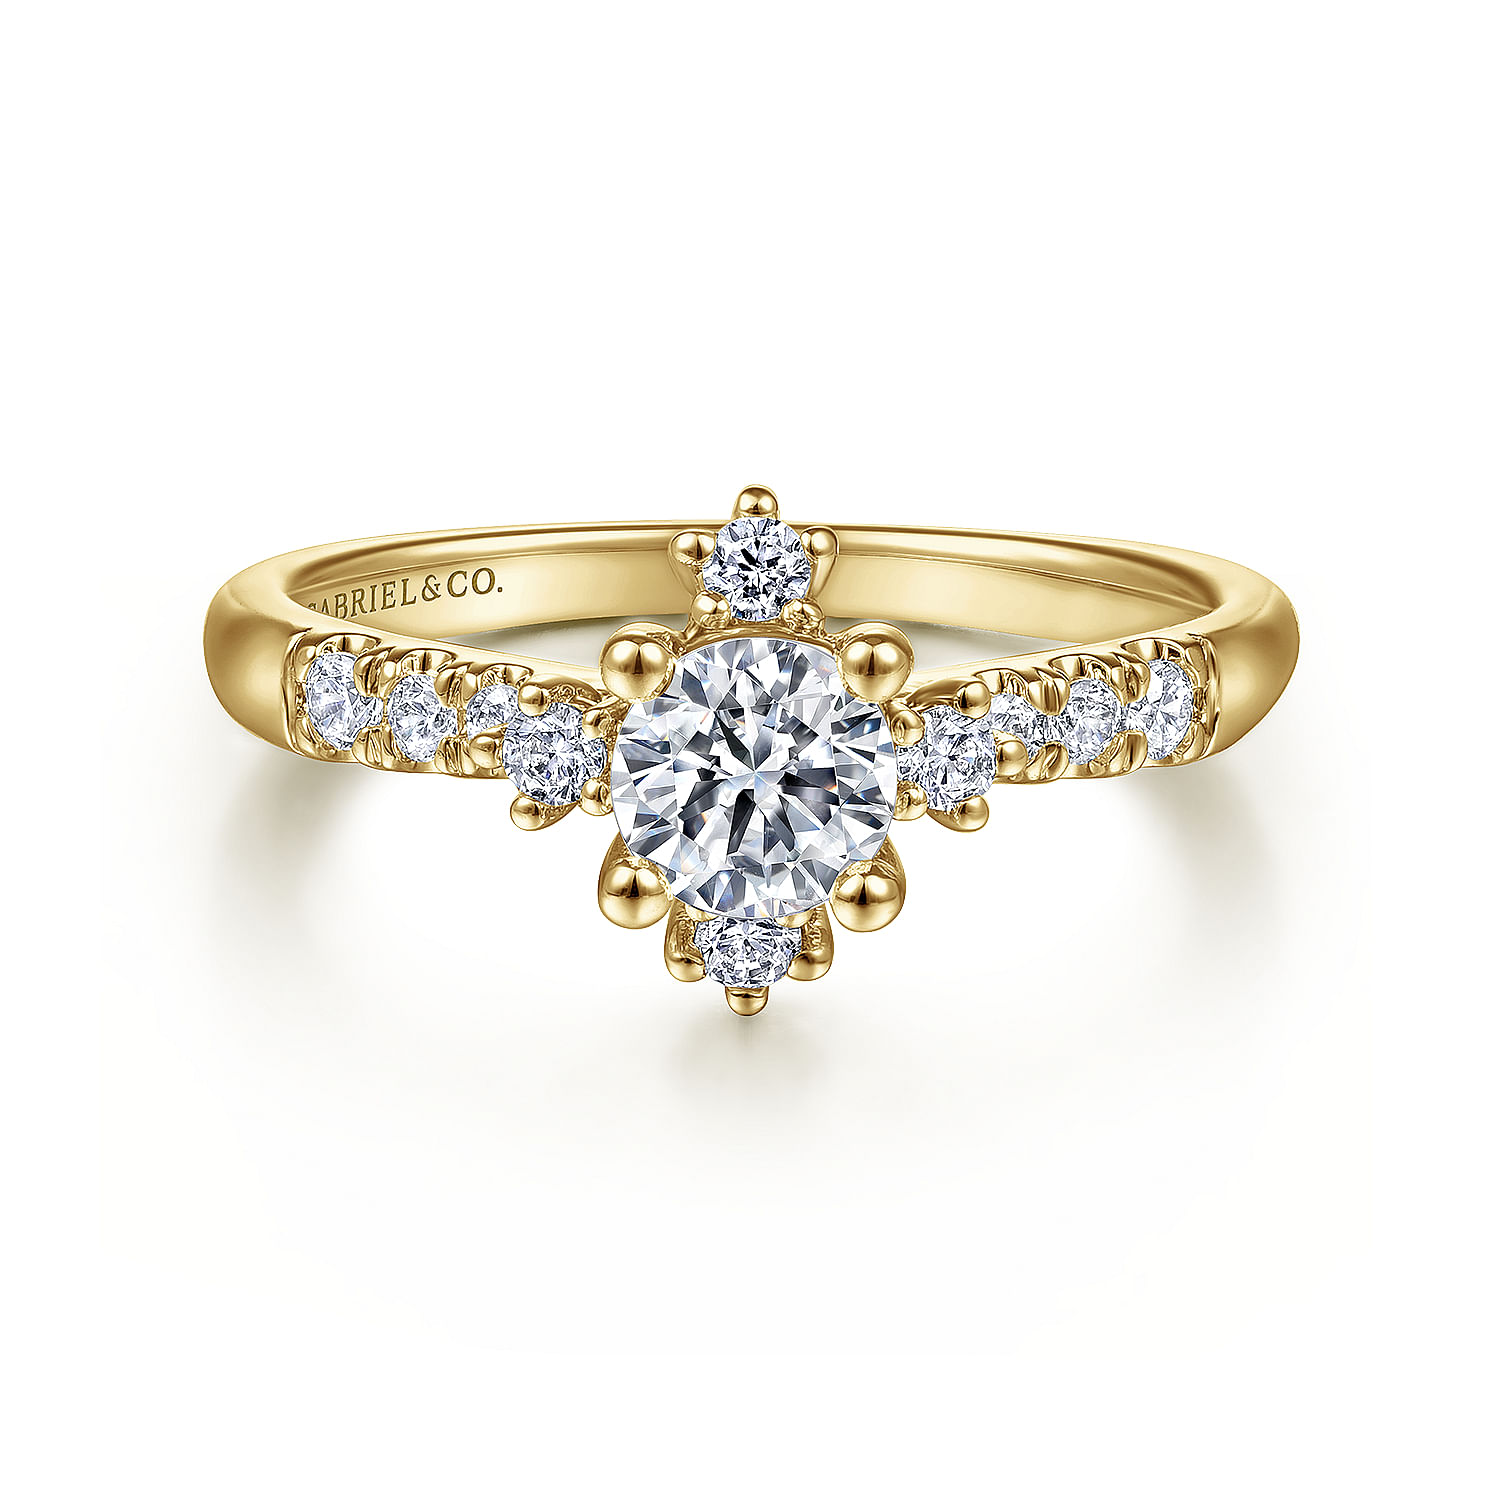 Glinda - Unique 14K Yellow Gold Halo Diamond Engagement Ring